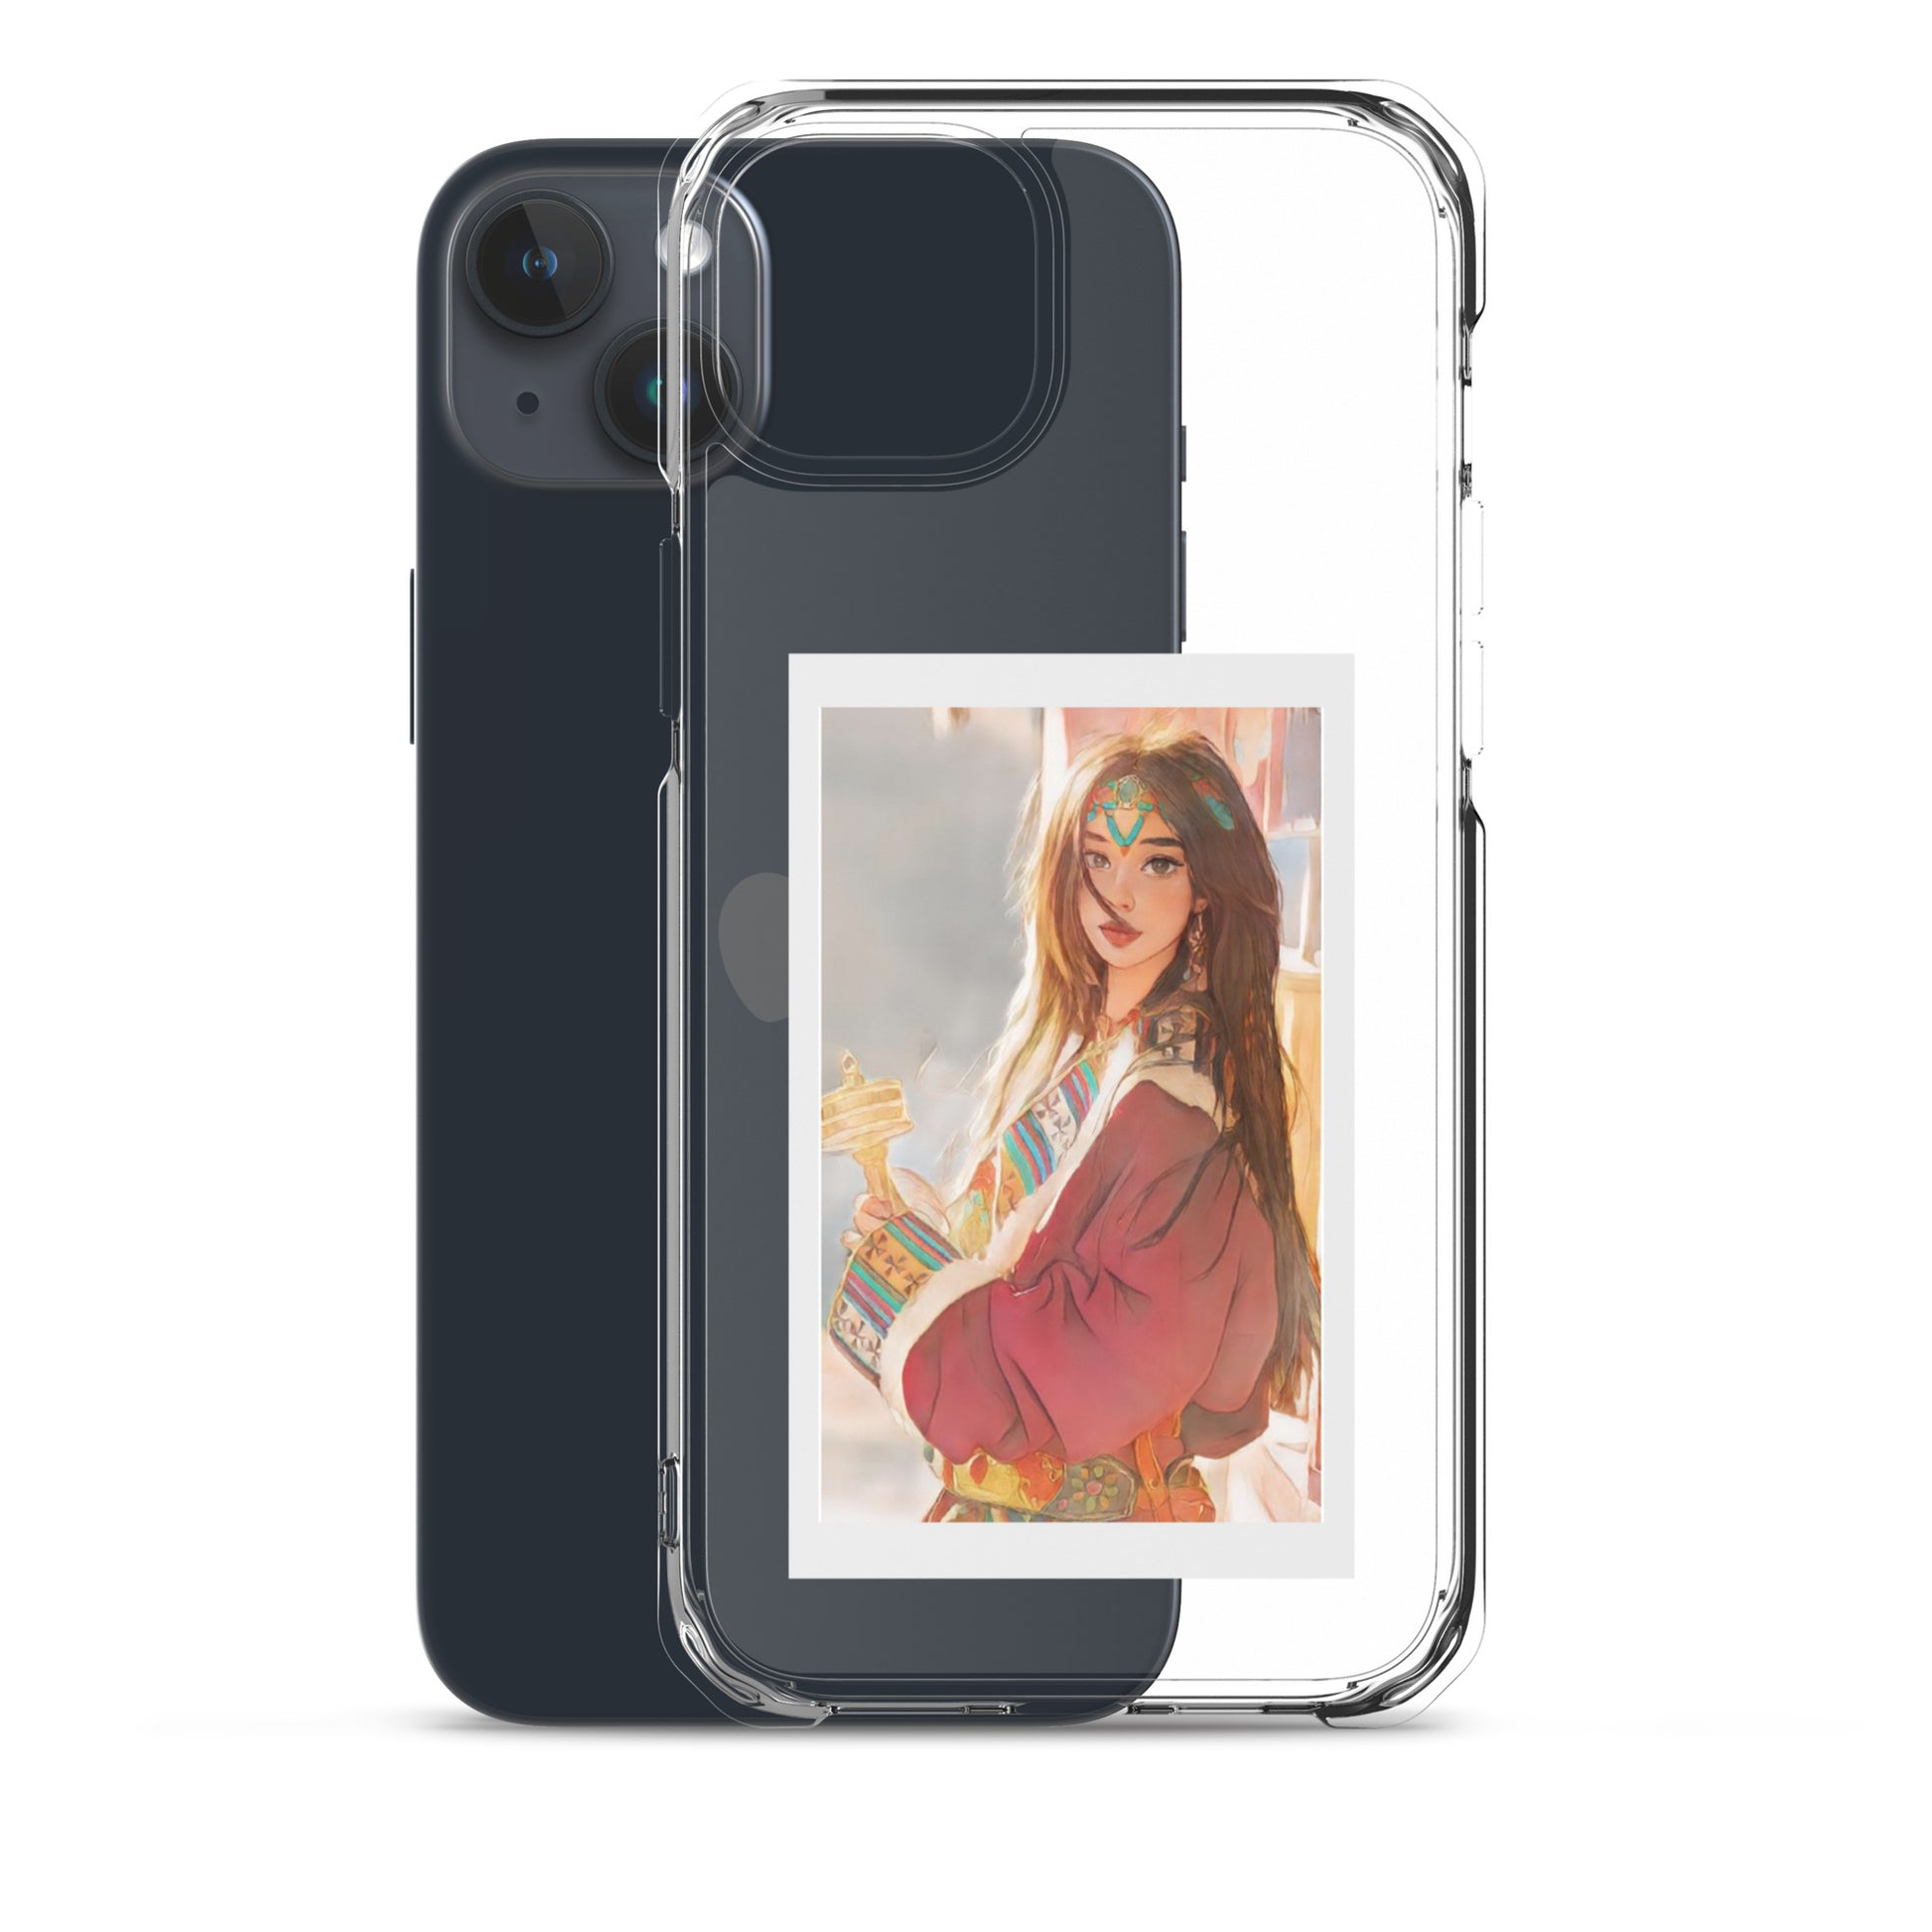 Tibetan Premium iPhone case-Tibetan-Tibetan Phone Case-Tibetan Culture-Tibetan Cartoon mobile case-Tibetan lady - Tibetan girl printed premium clear mobile case